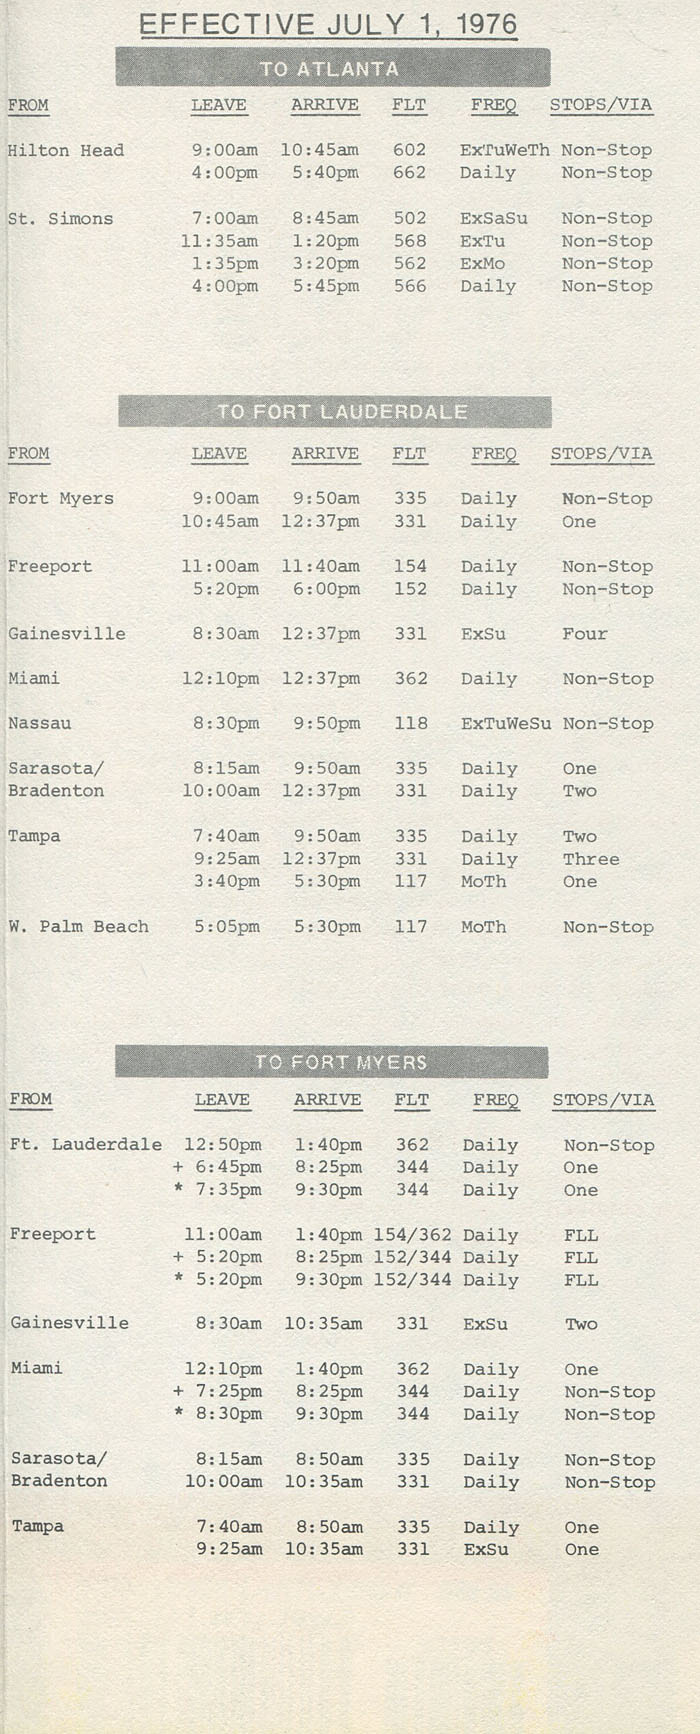 Air South / Florida Air Lines timetable